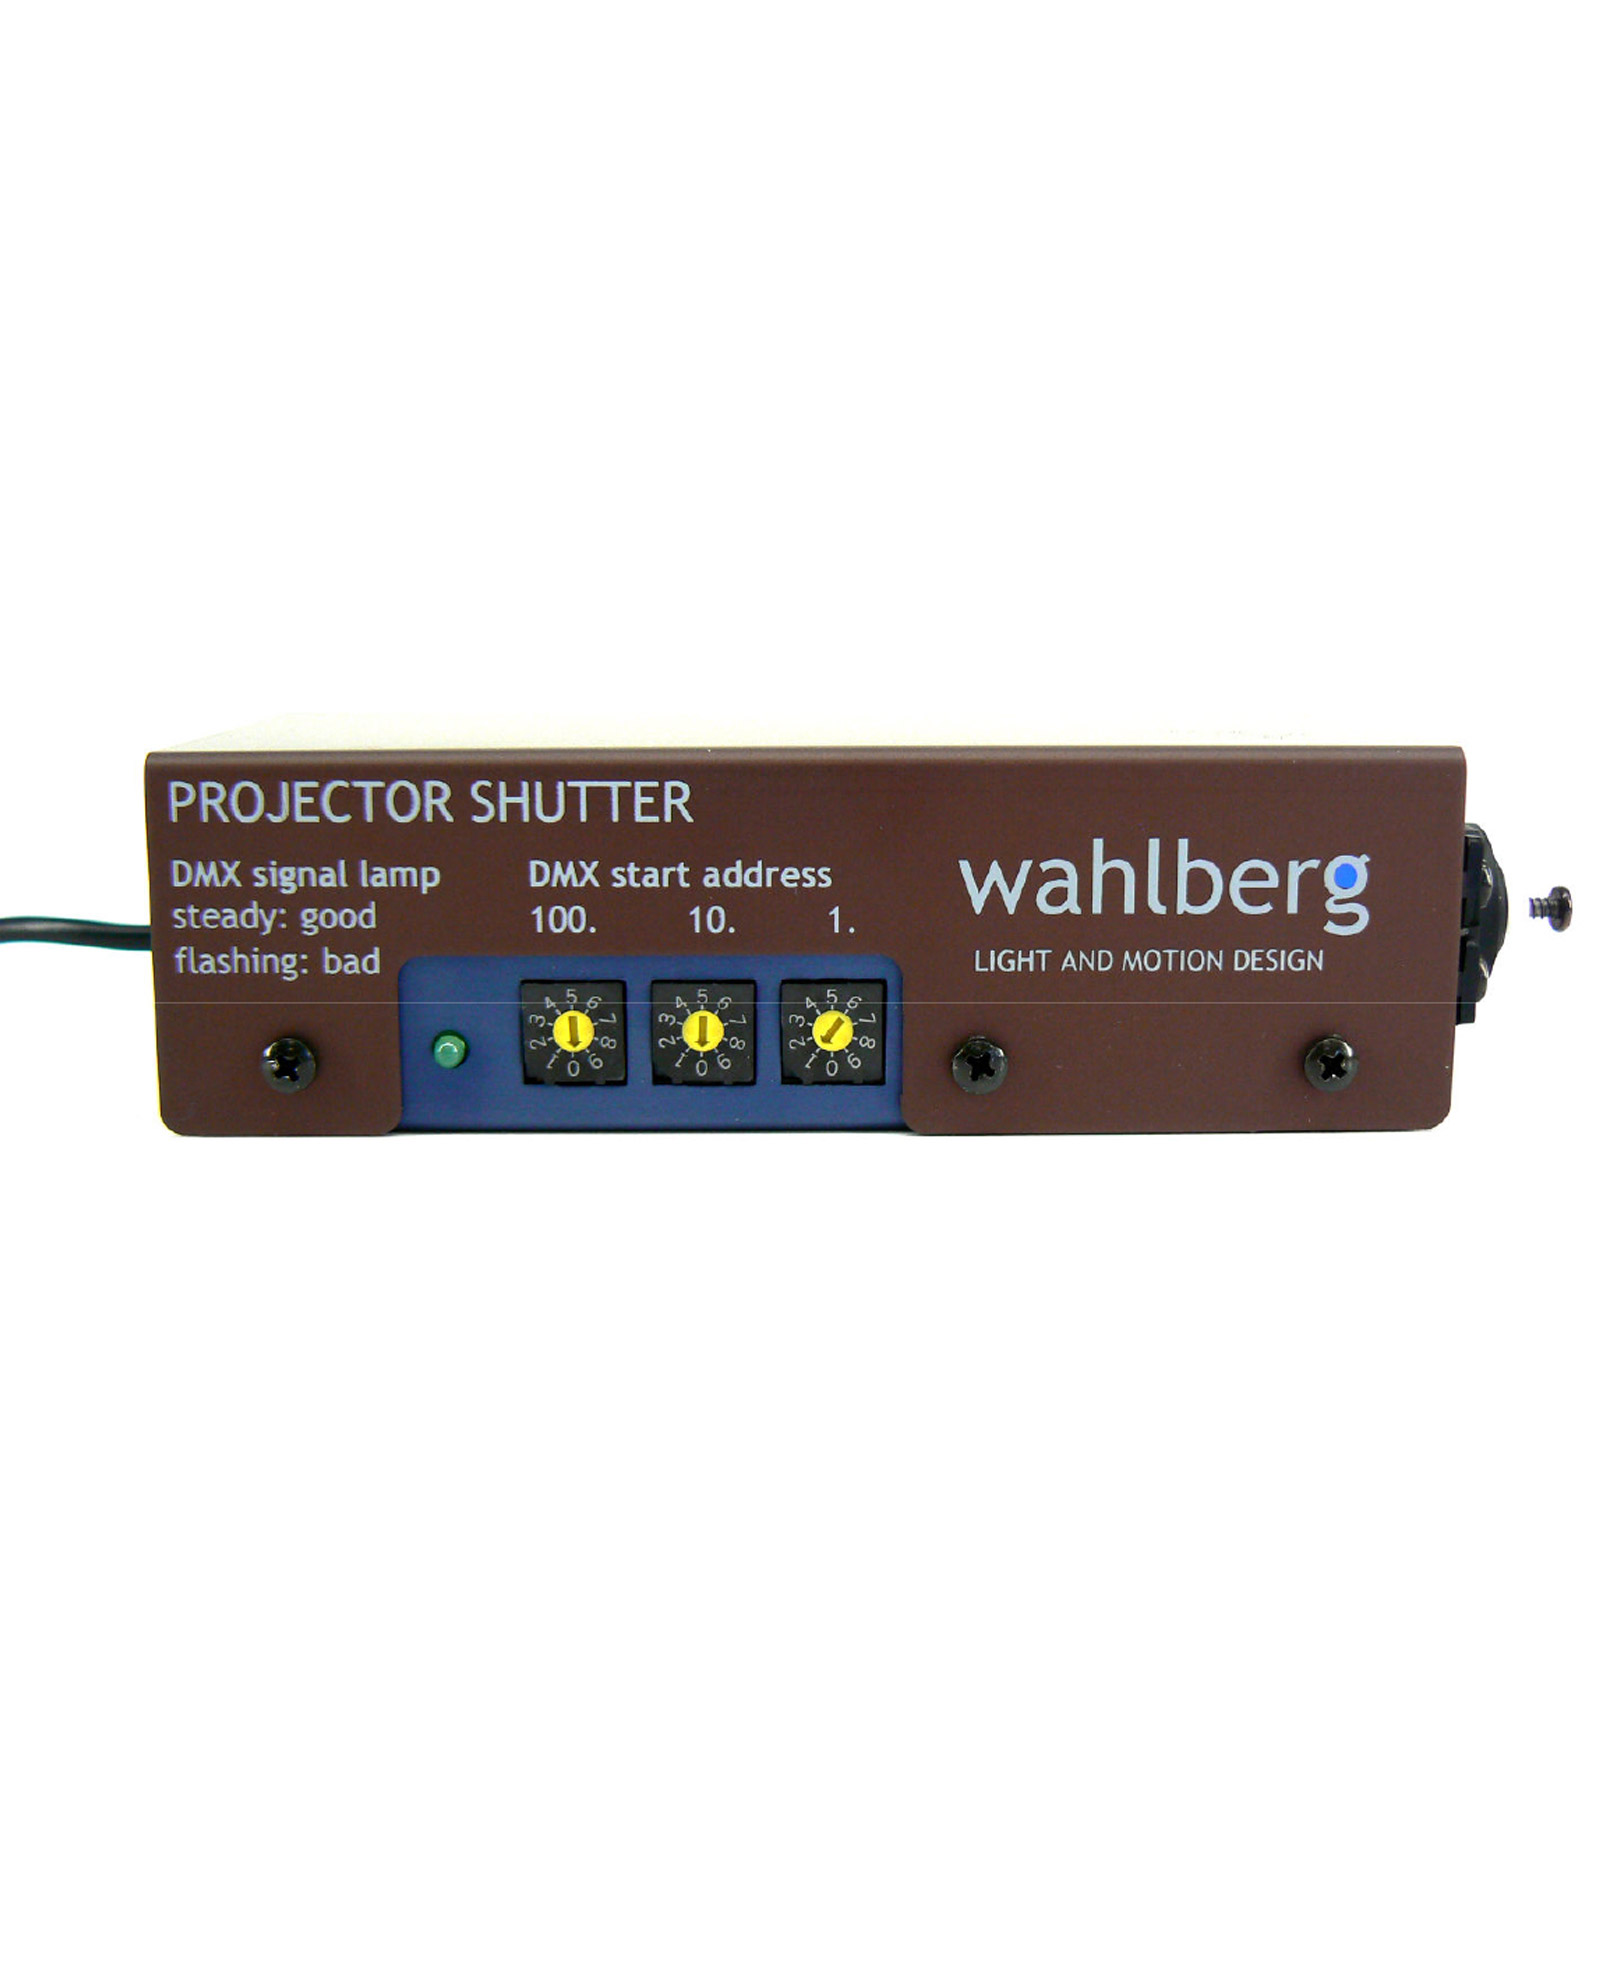 Walhberg Projector Shutter Dmx 2